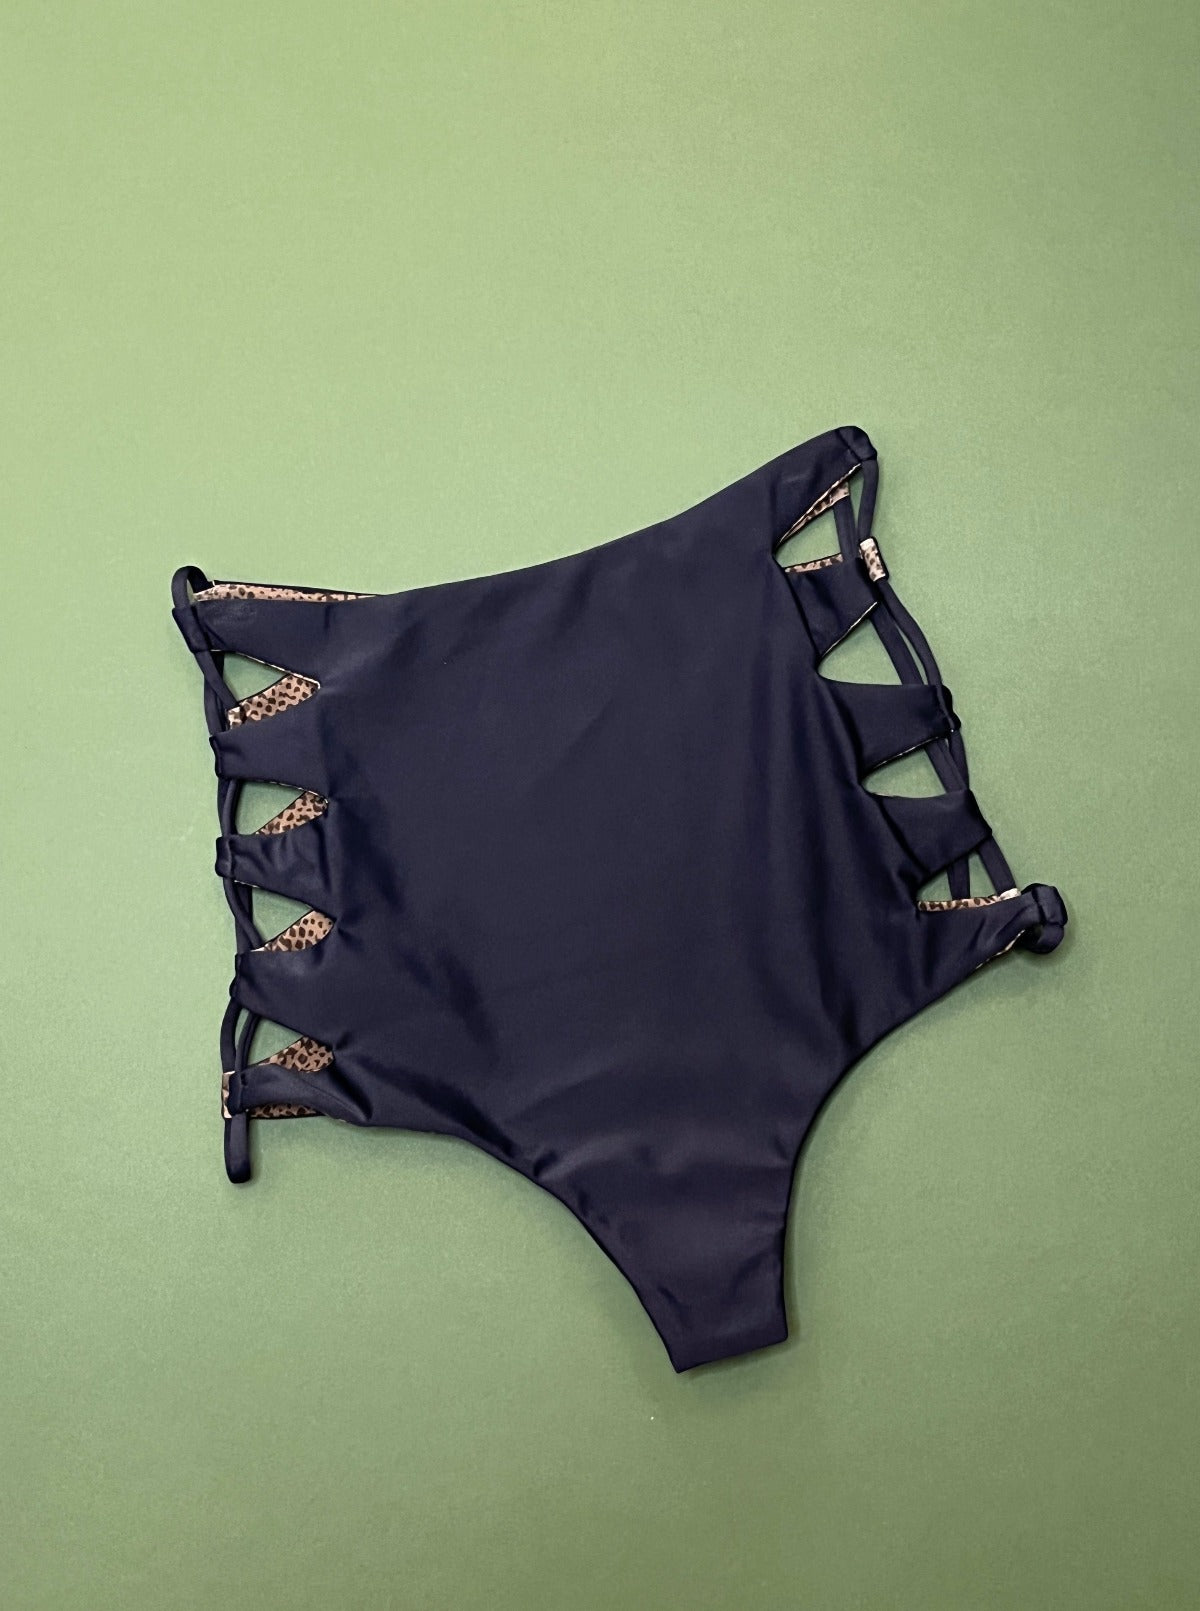 Acacia: Queens High-Waisted Bikini Bottom - Licorice